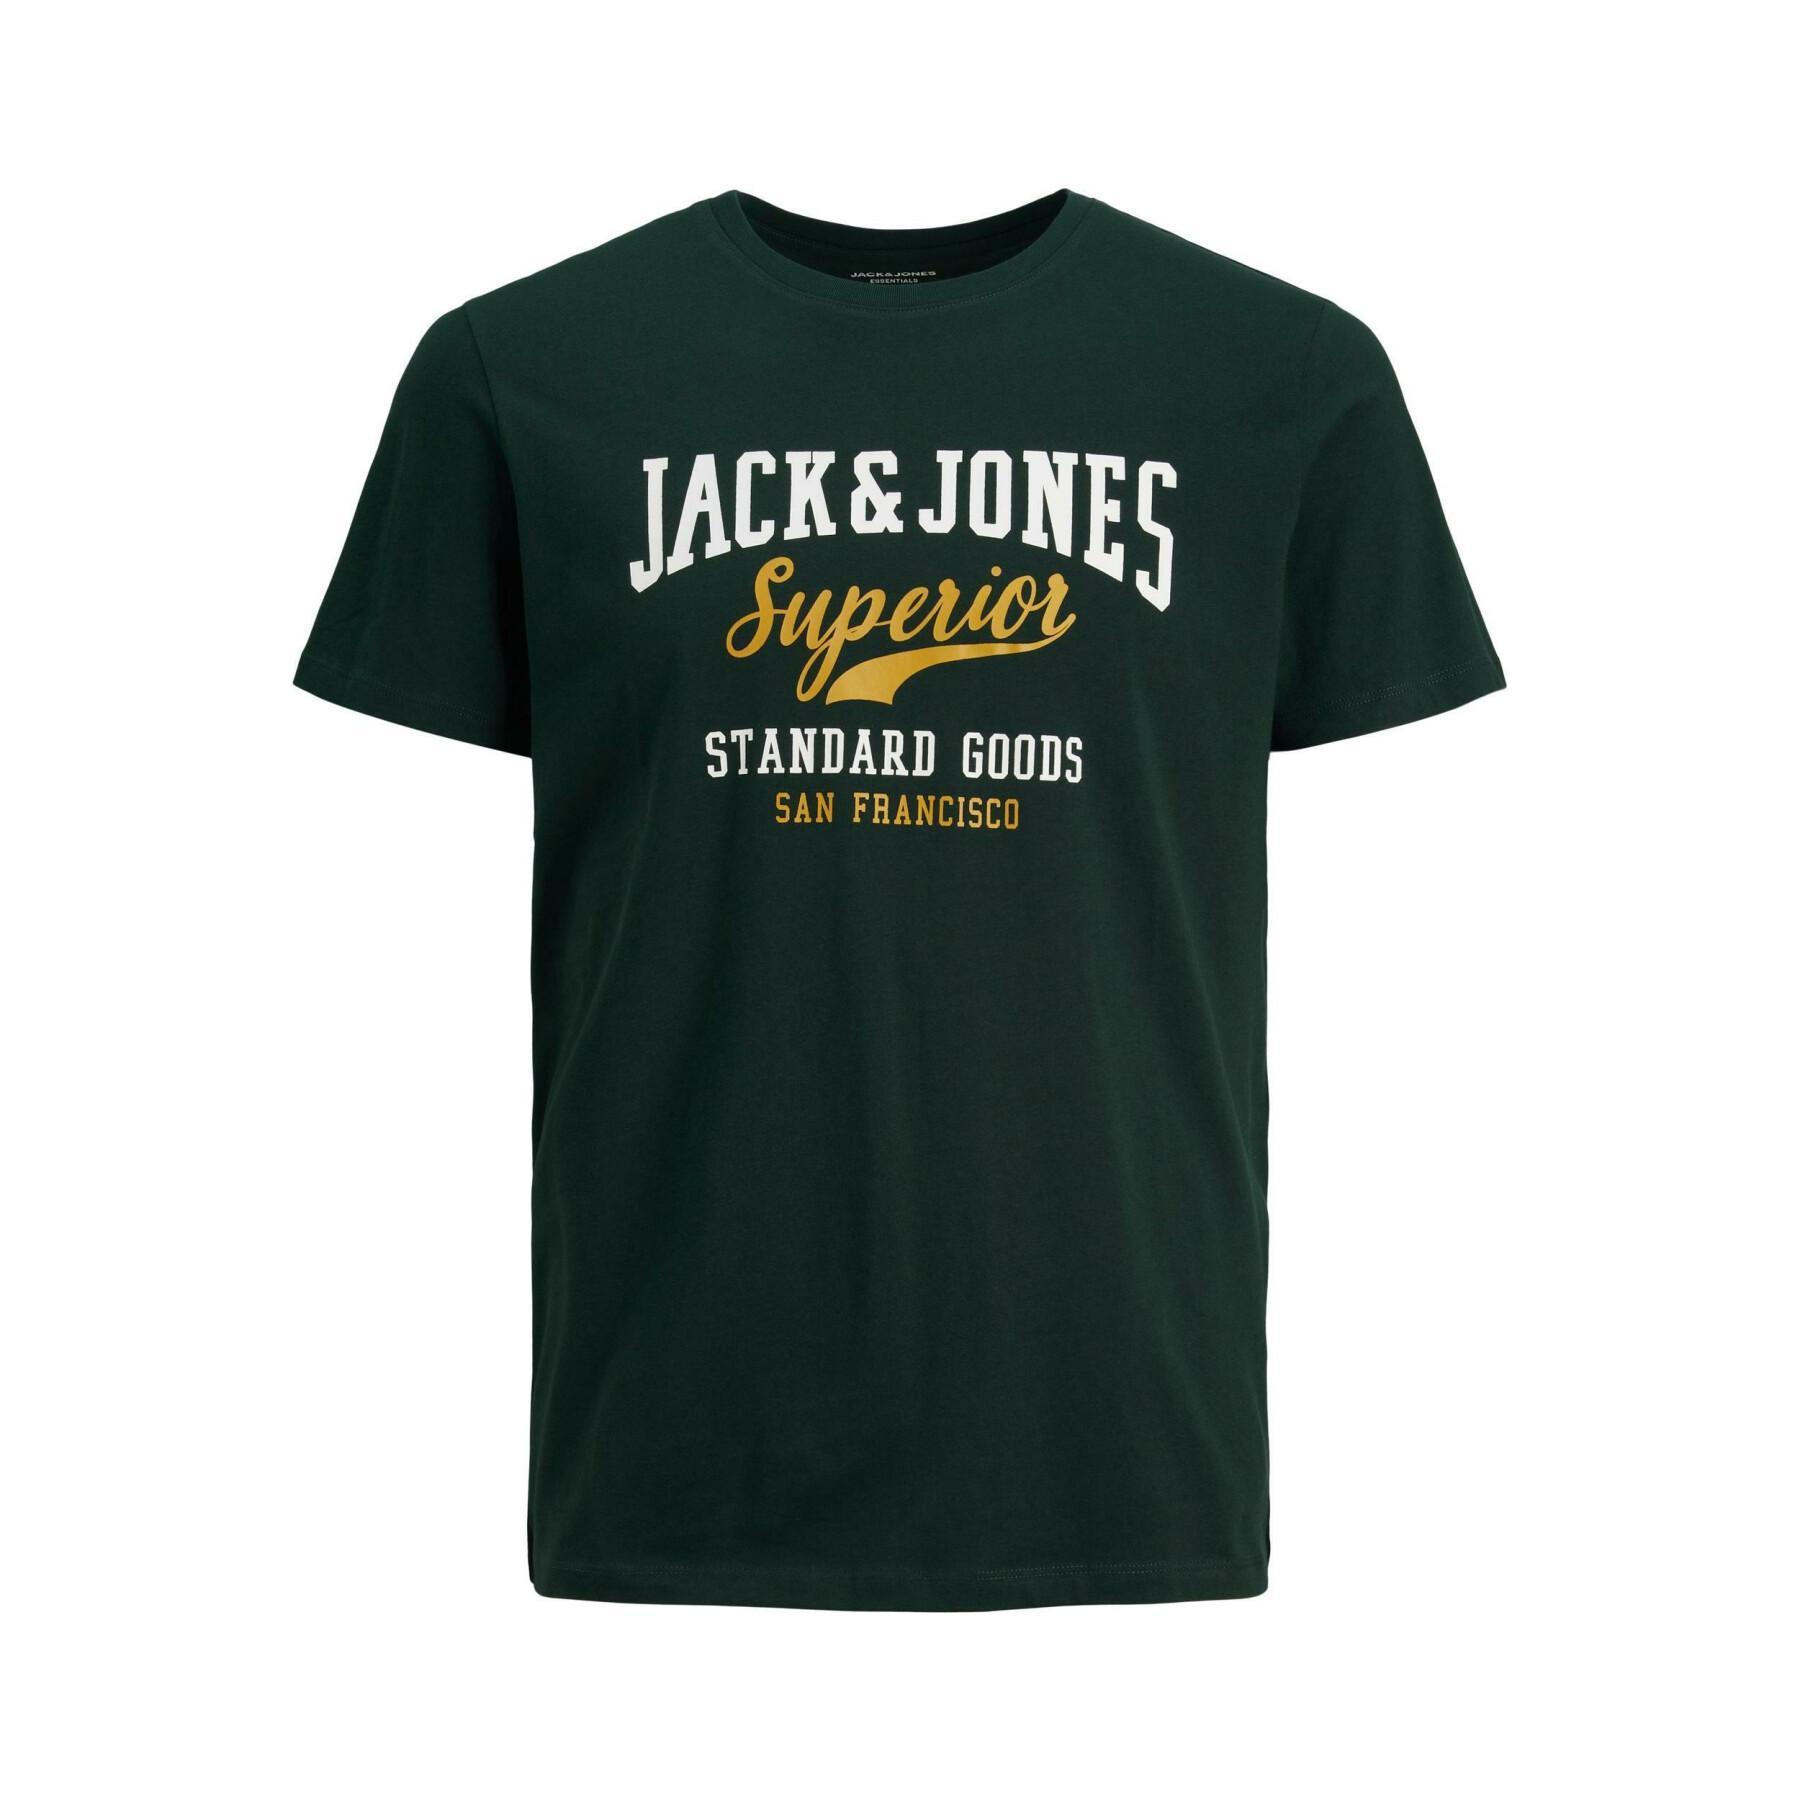 Maglietta Jack & Jones Logo Aw22